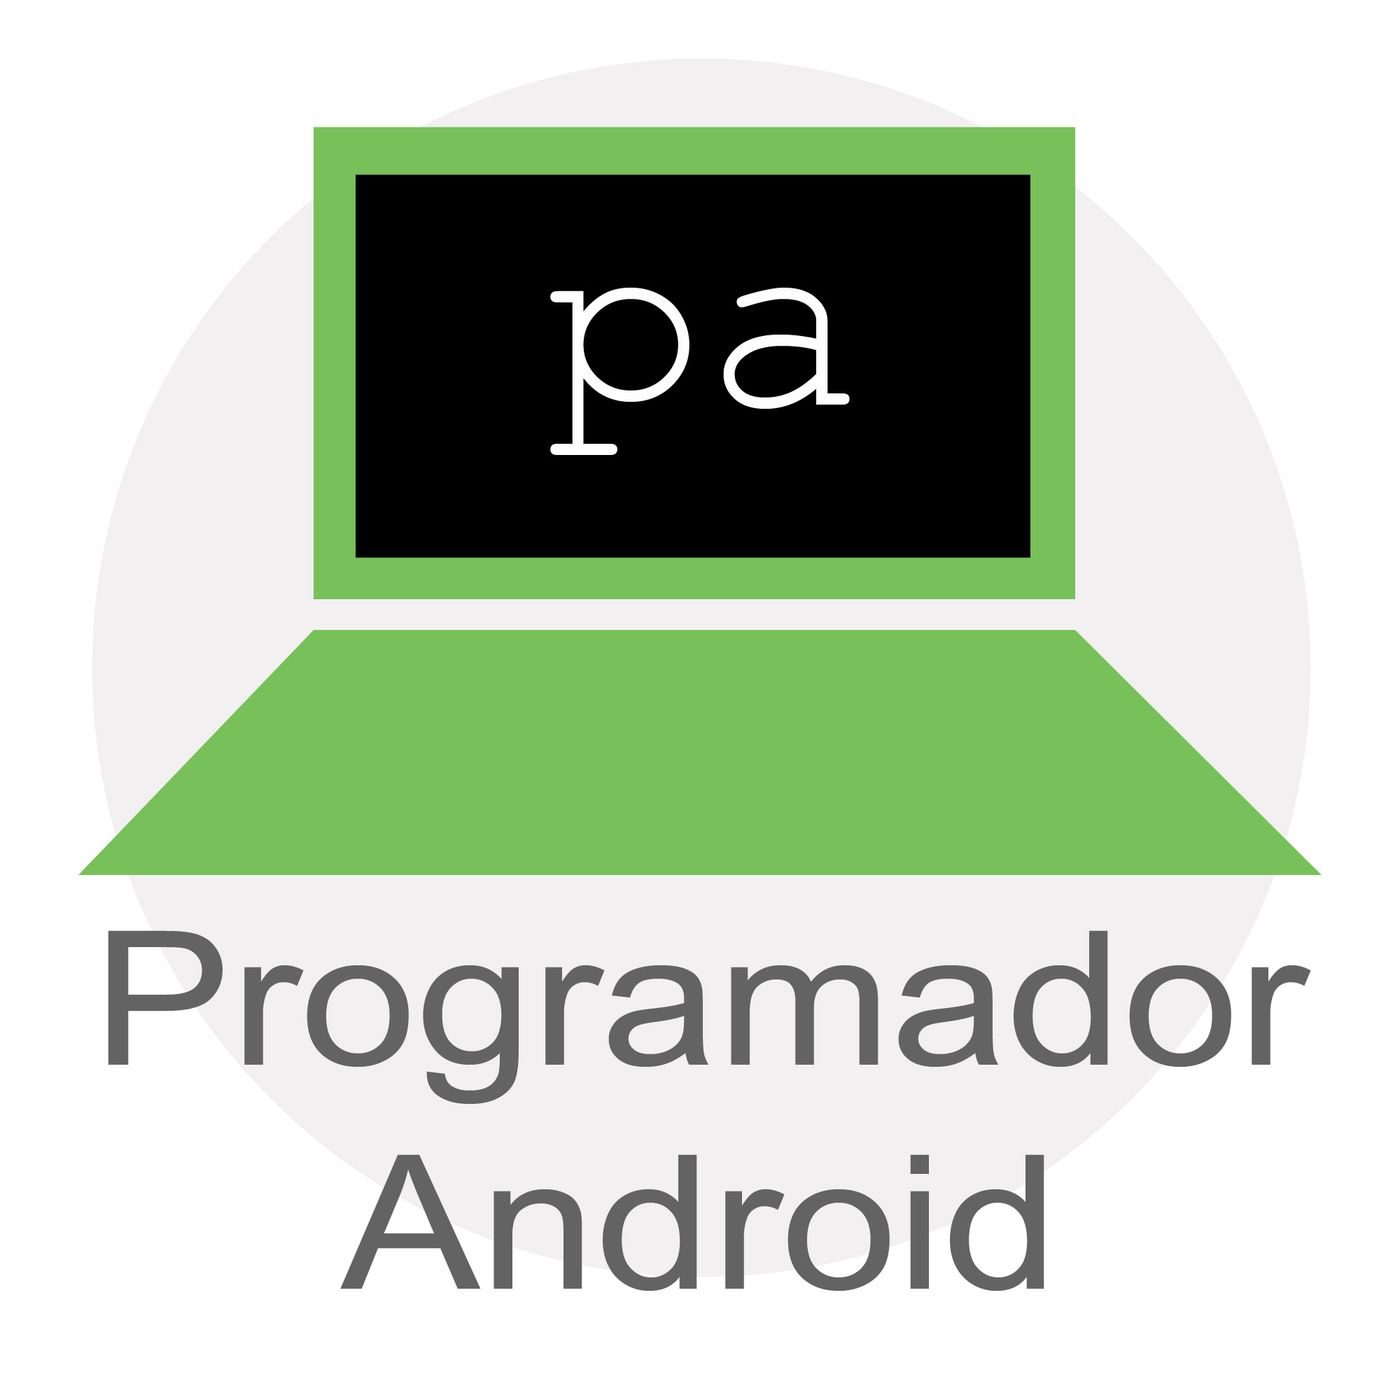 Programador Android